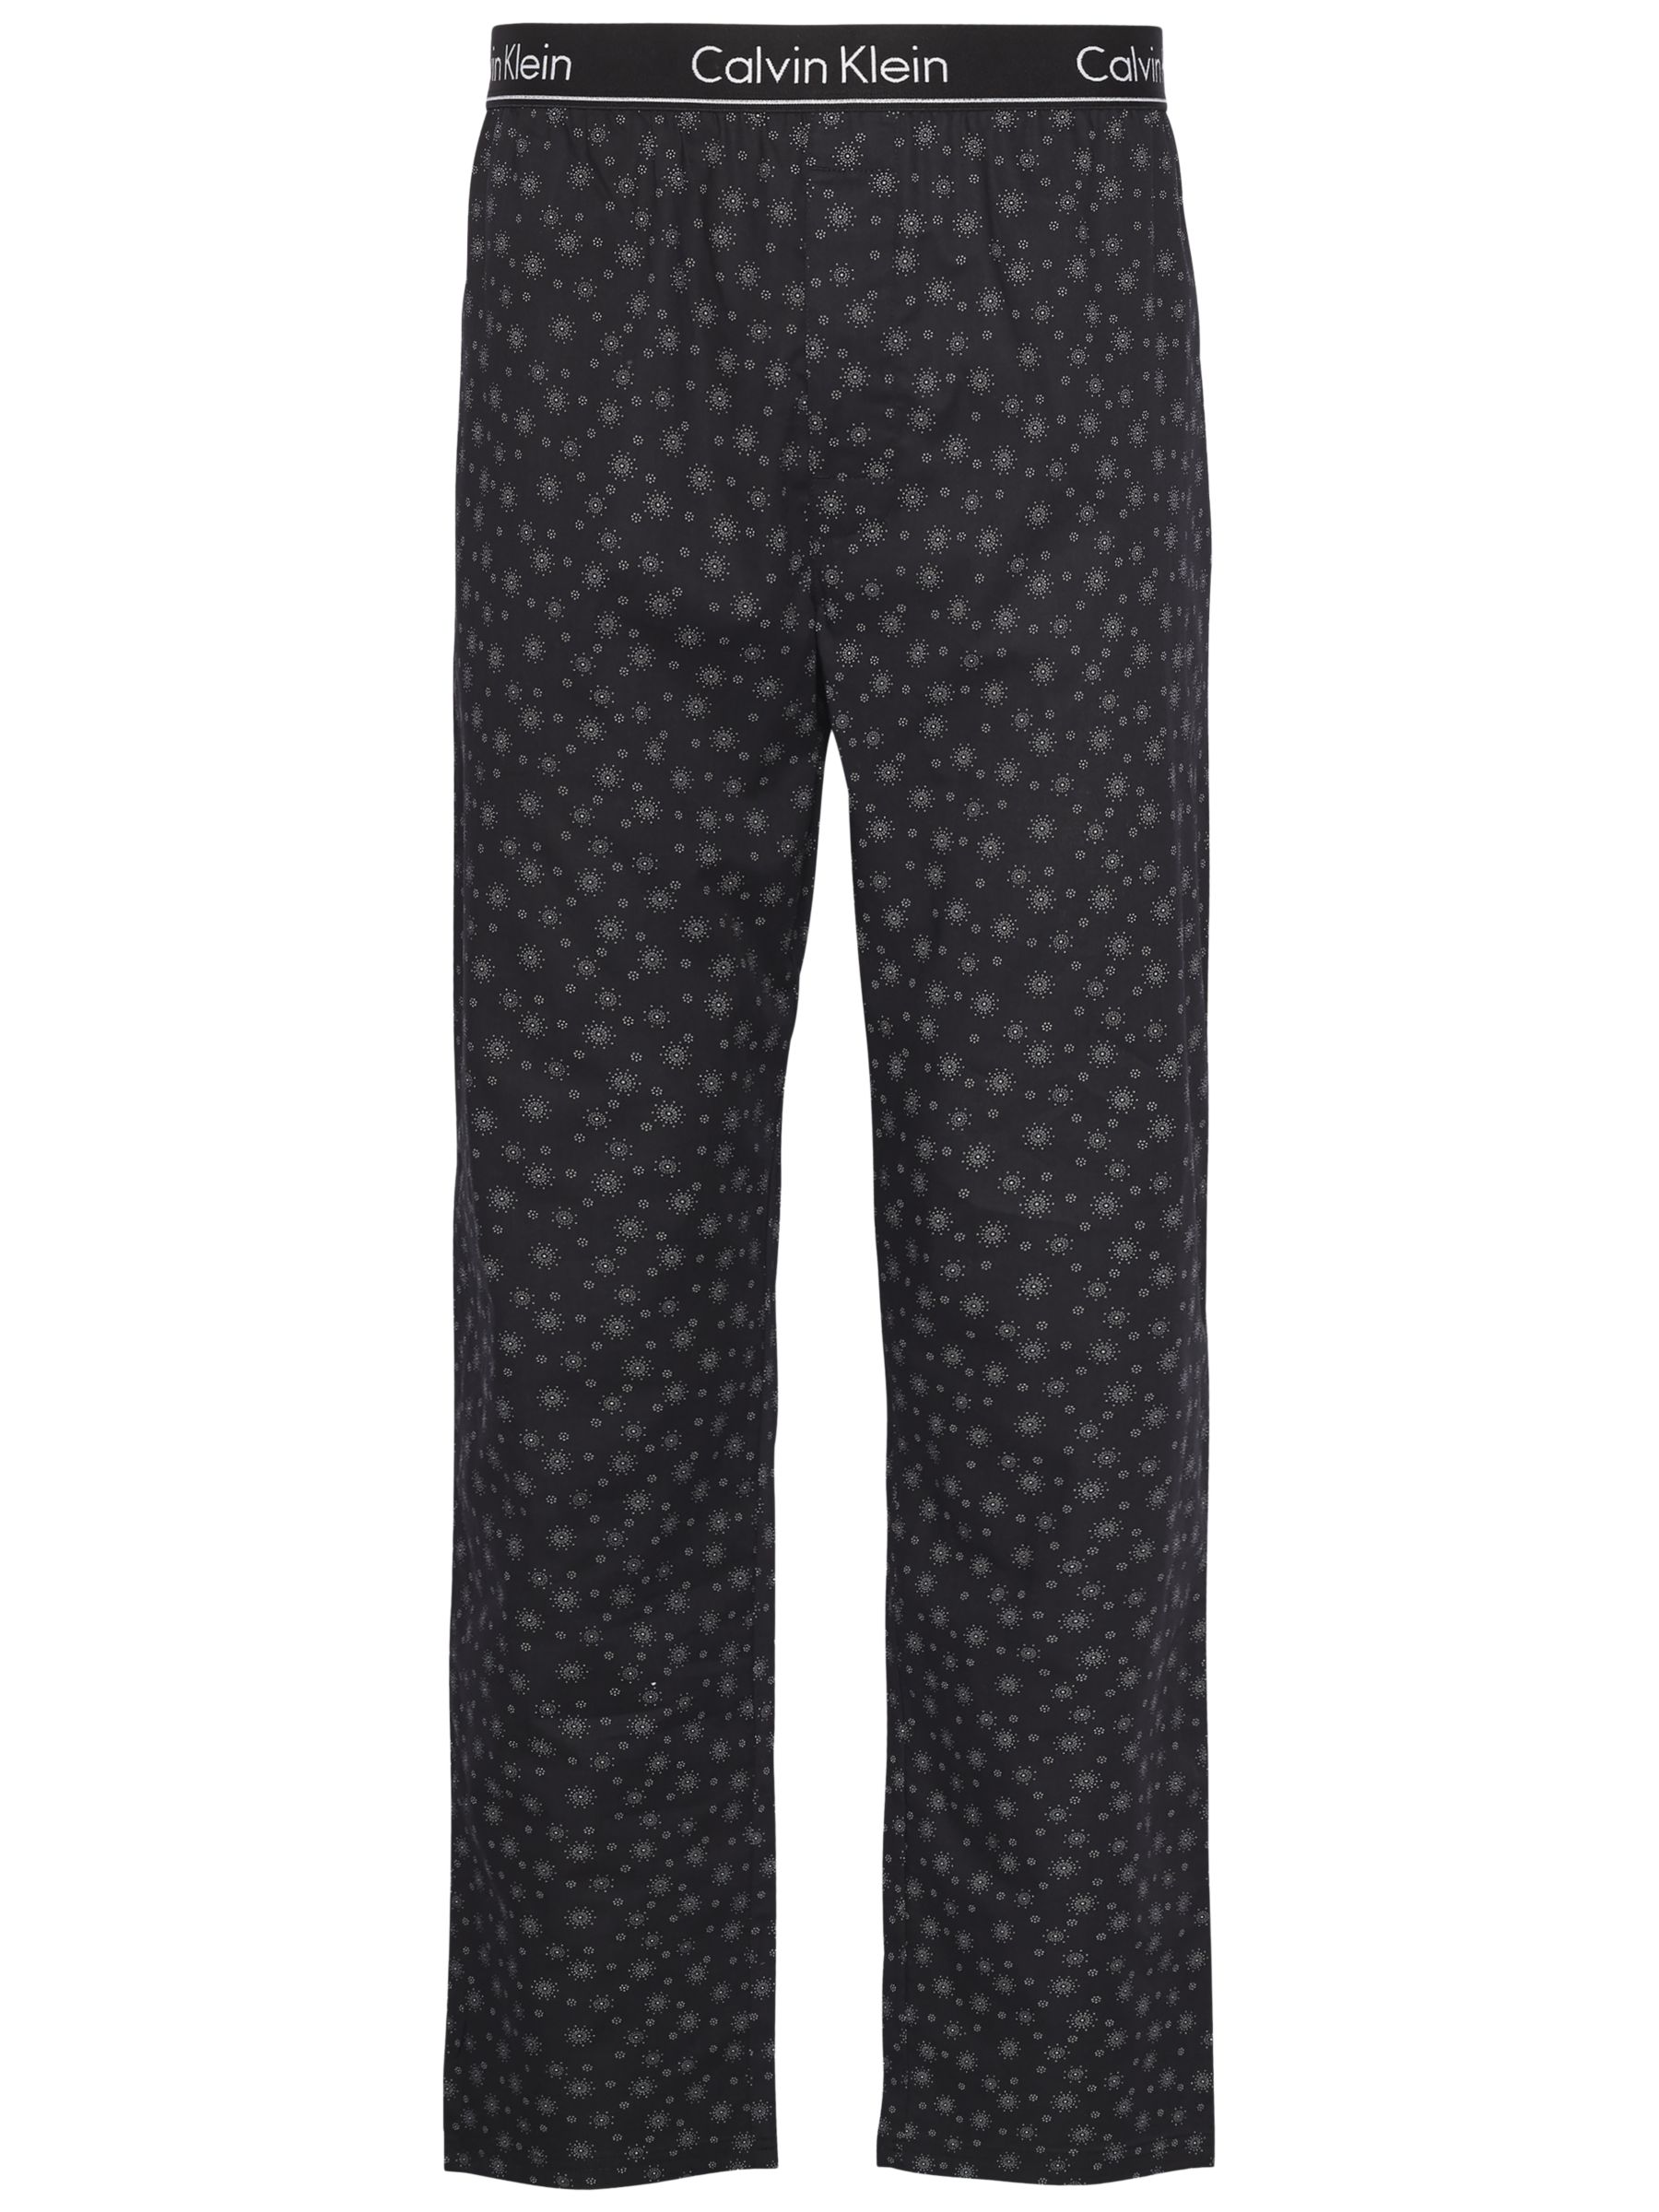 Calvin Klein Star Pattern Cotton Pyjama Pants, Black